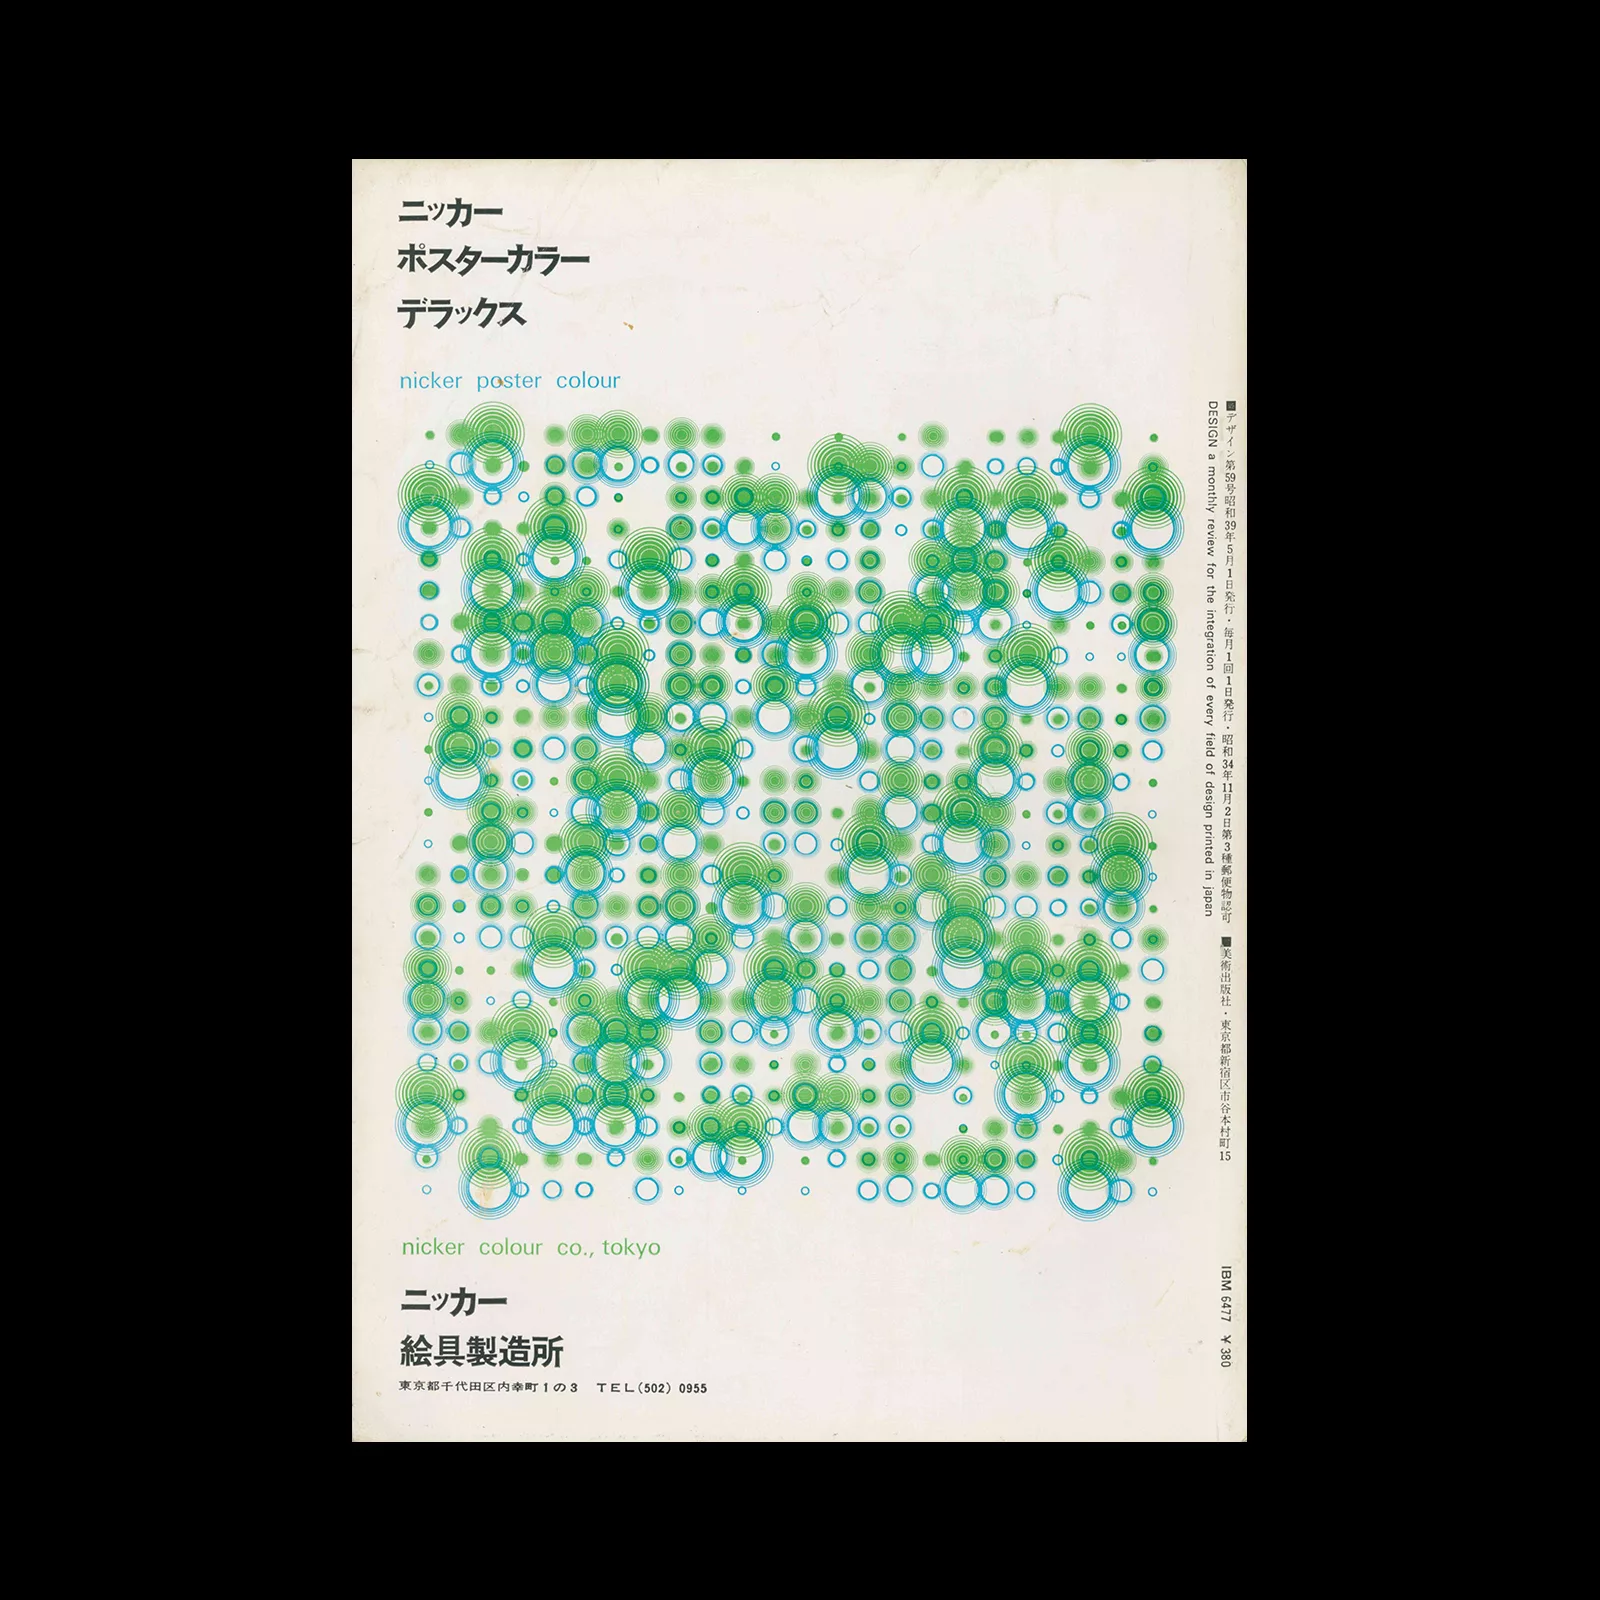 Design (Japan), 59, 1964. Cover design by Kohei Sugiura